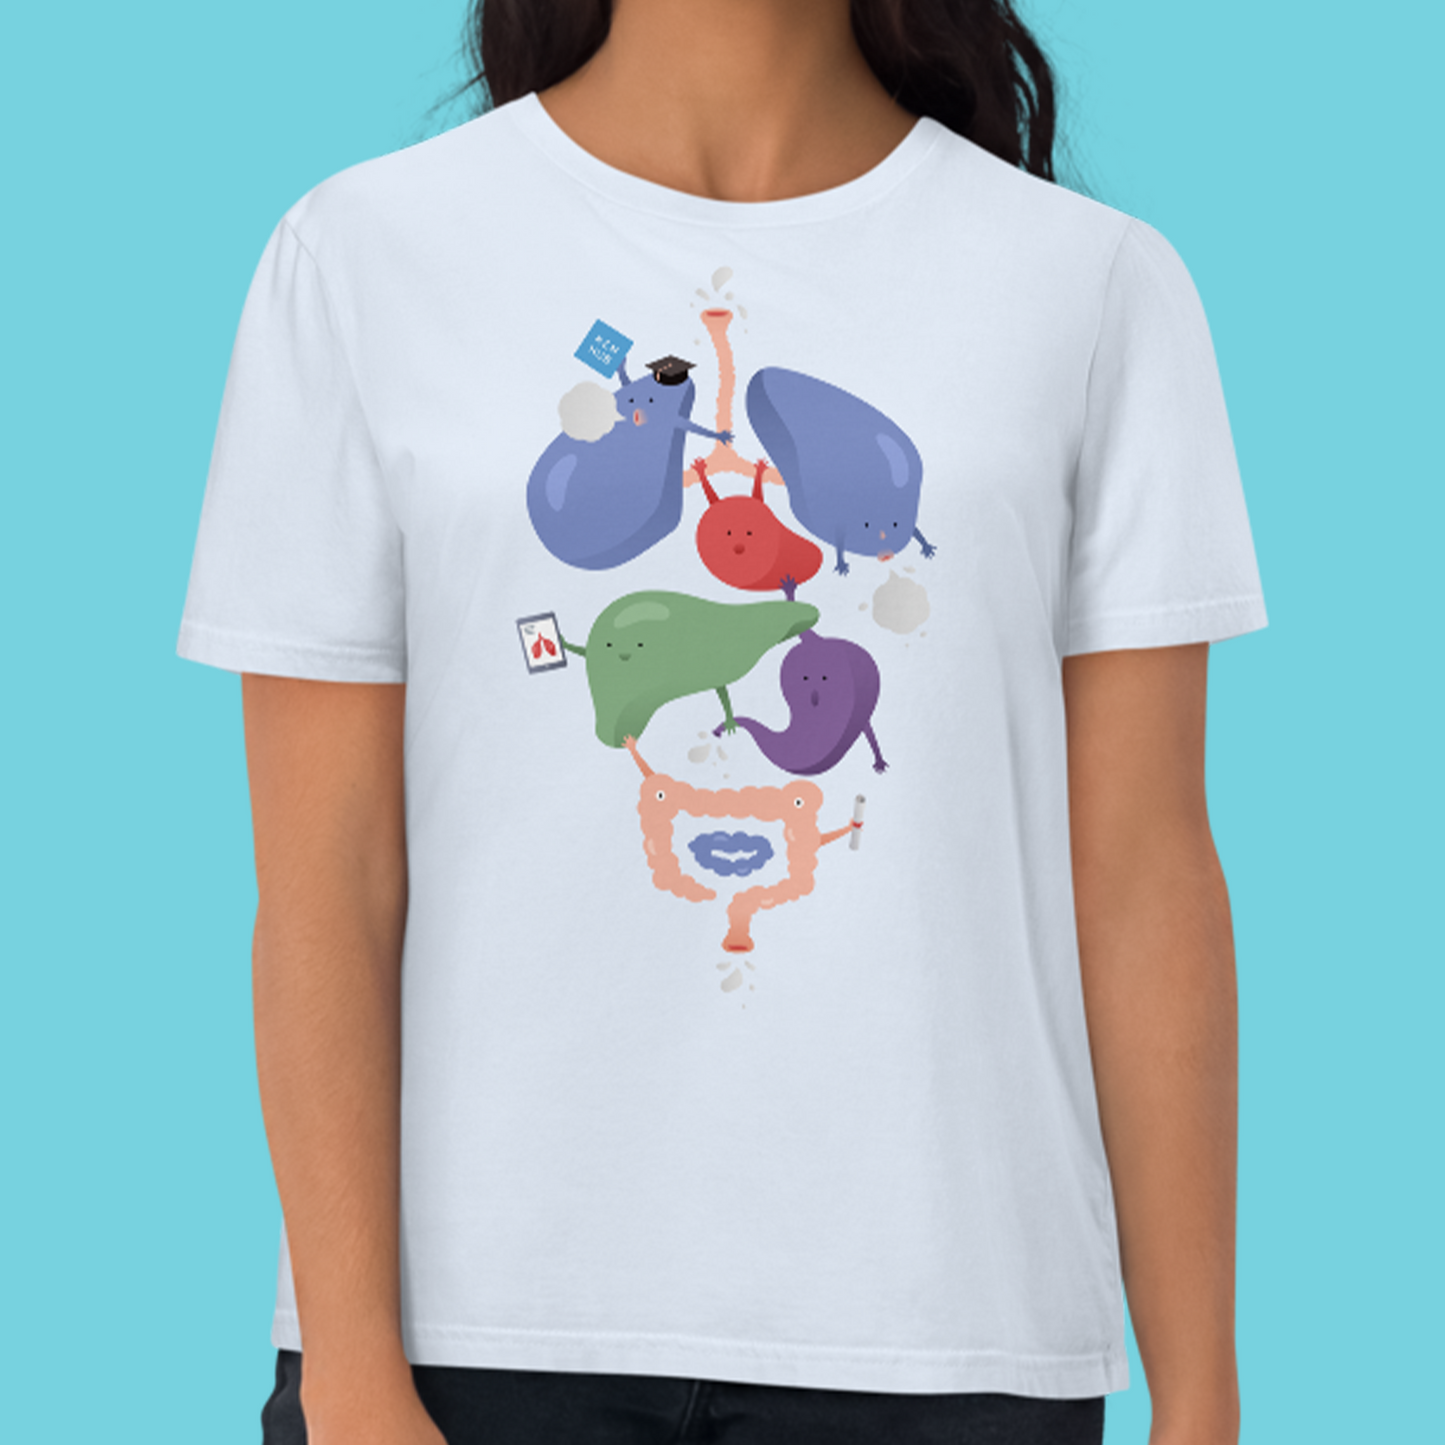 Cuddling Organs - T-Shirt